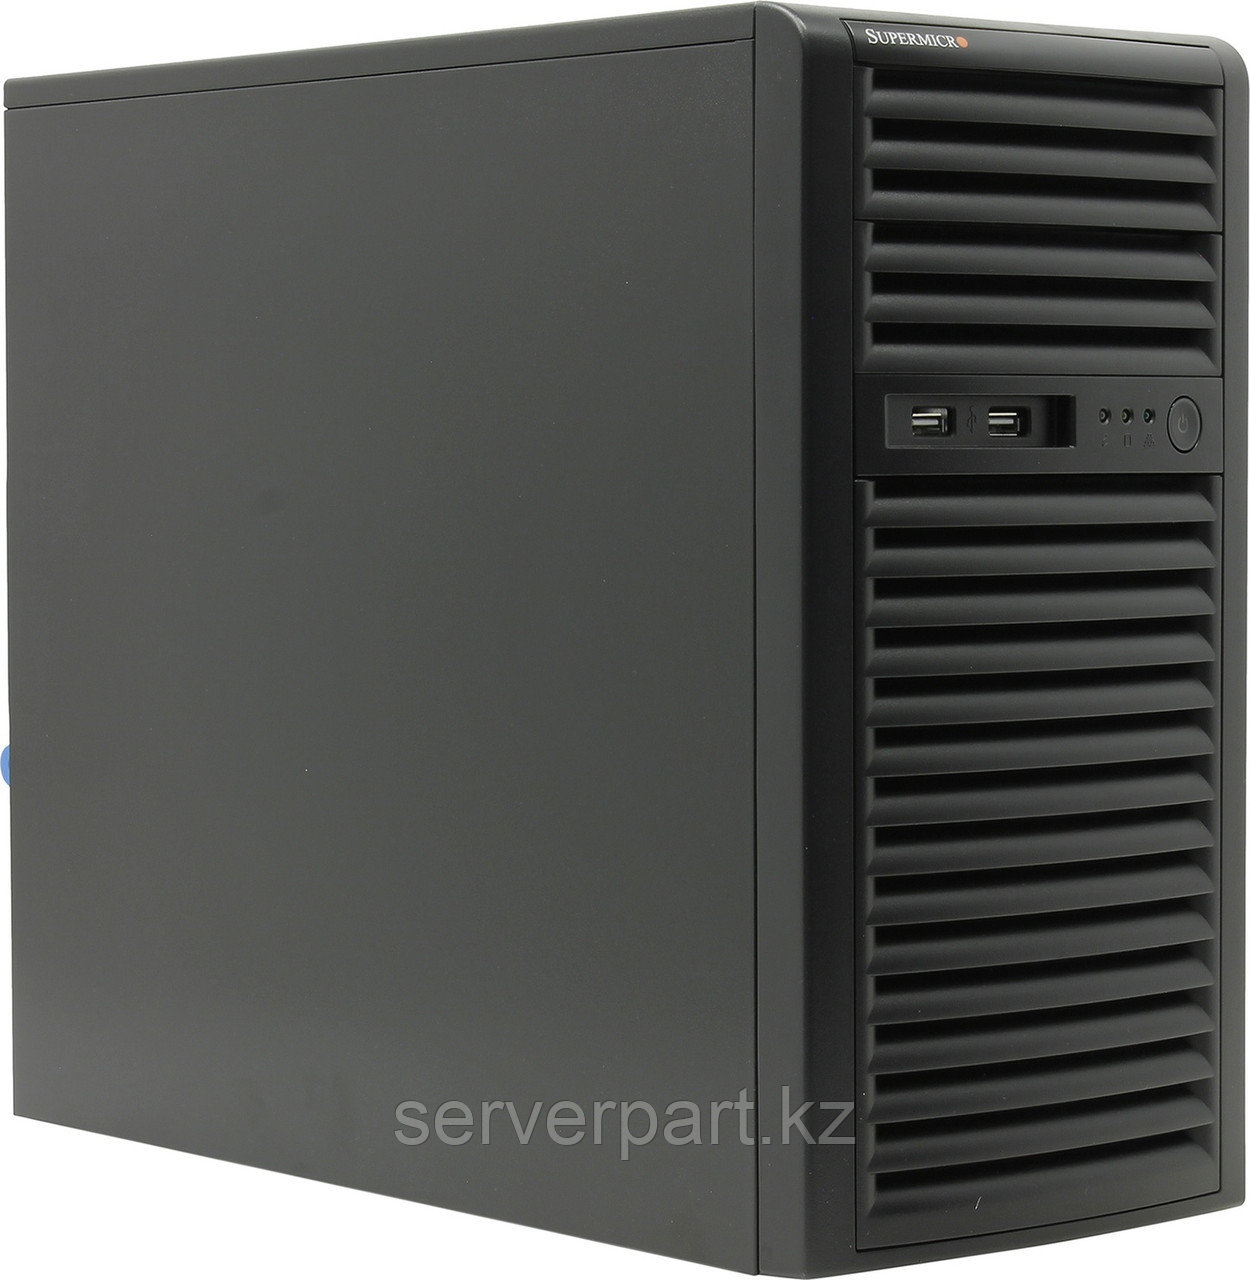 Сервер Supermicro 732-500B\X11DPL-i Tower 4LFF/1x10-core intel Xeon 4210 SC-S 2.2GHz/no RAM/no HDD